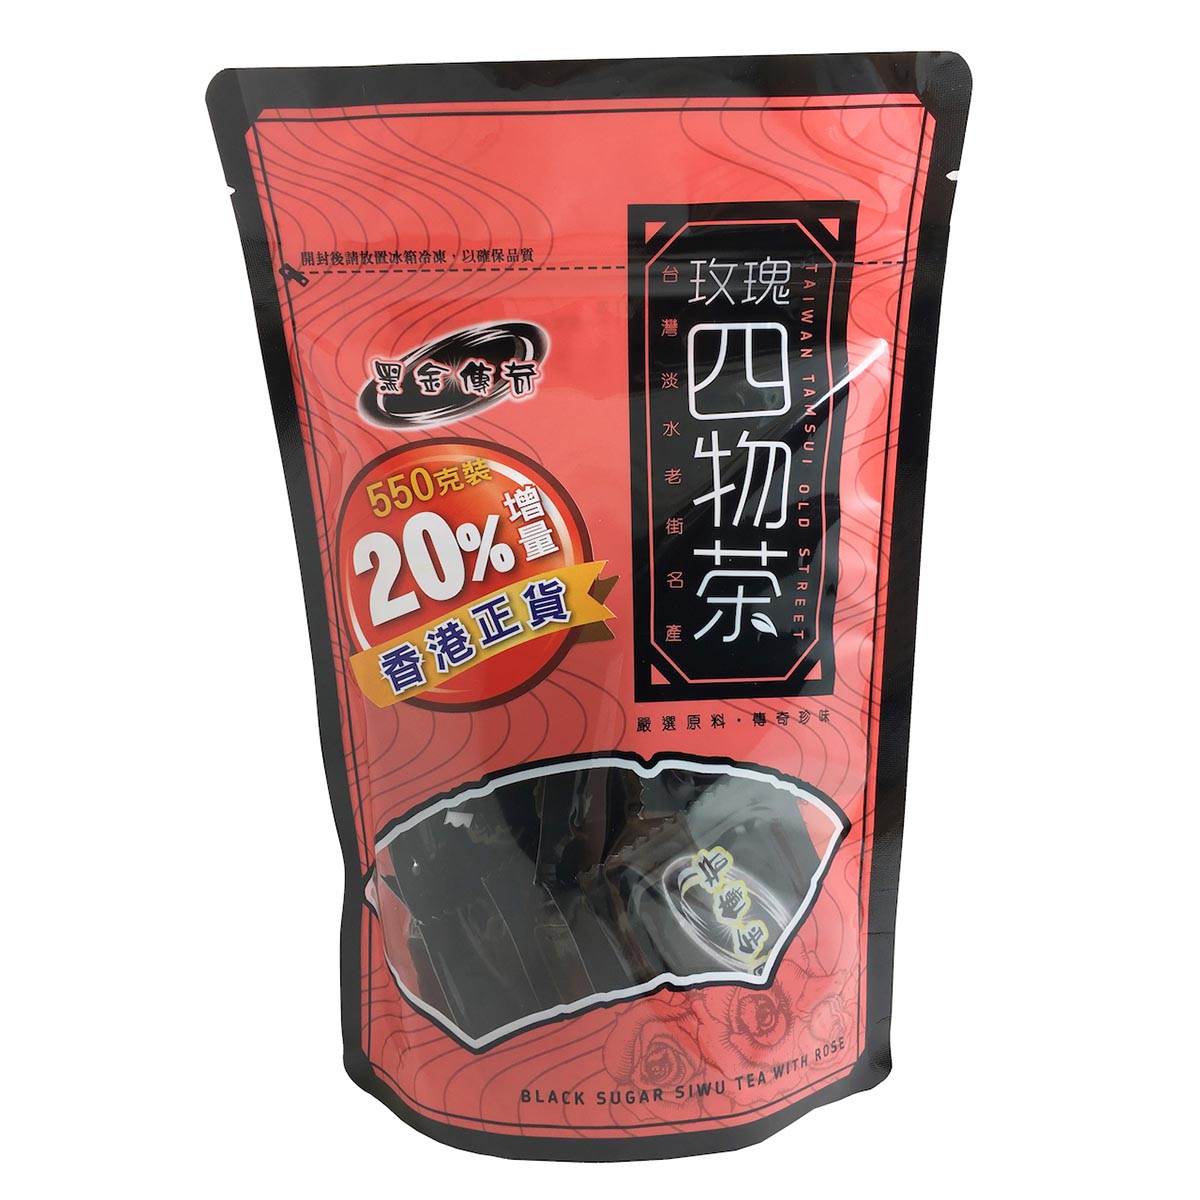 Blackgold Legacy 玫瑰四物茶 20%增量裝